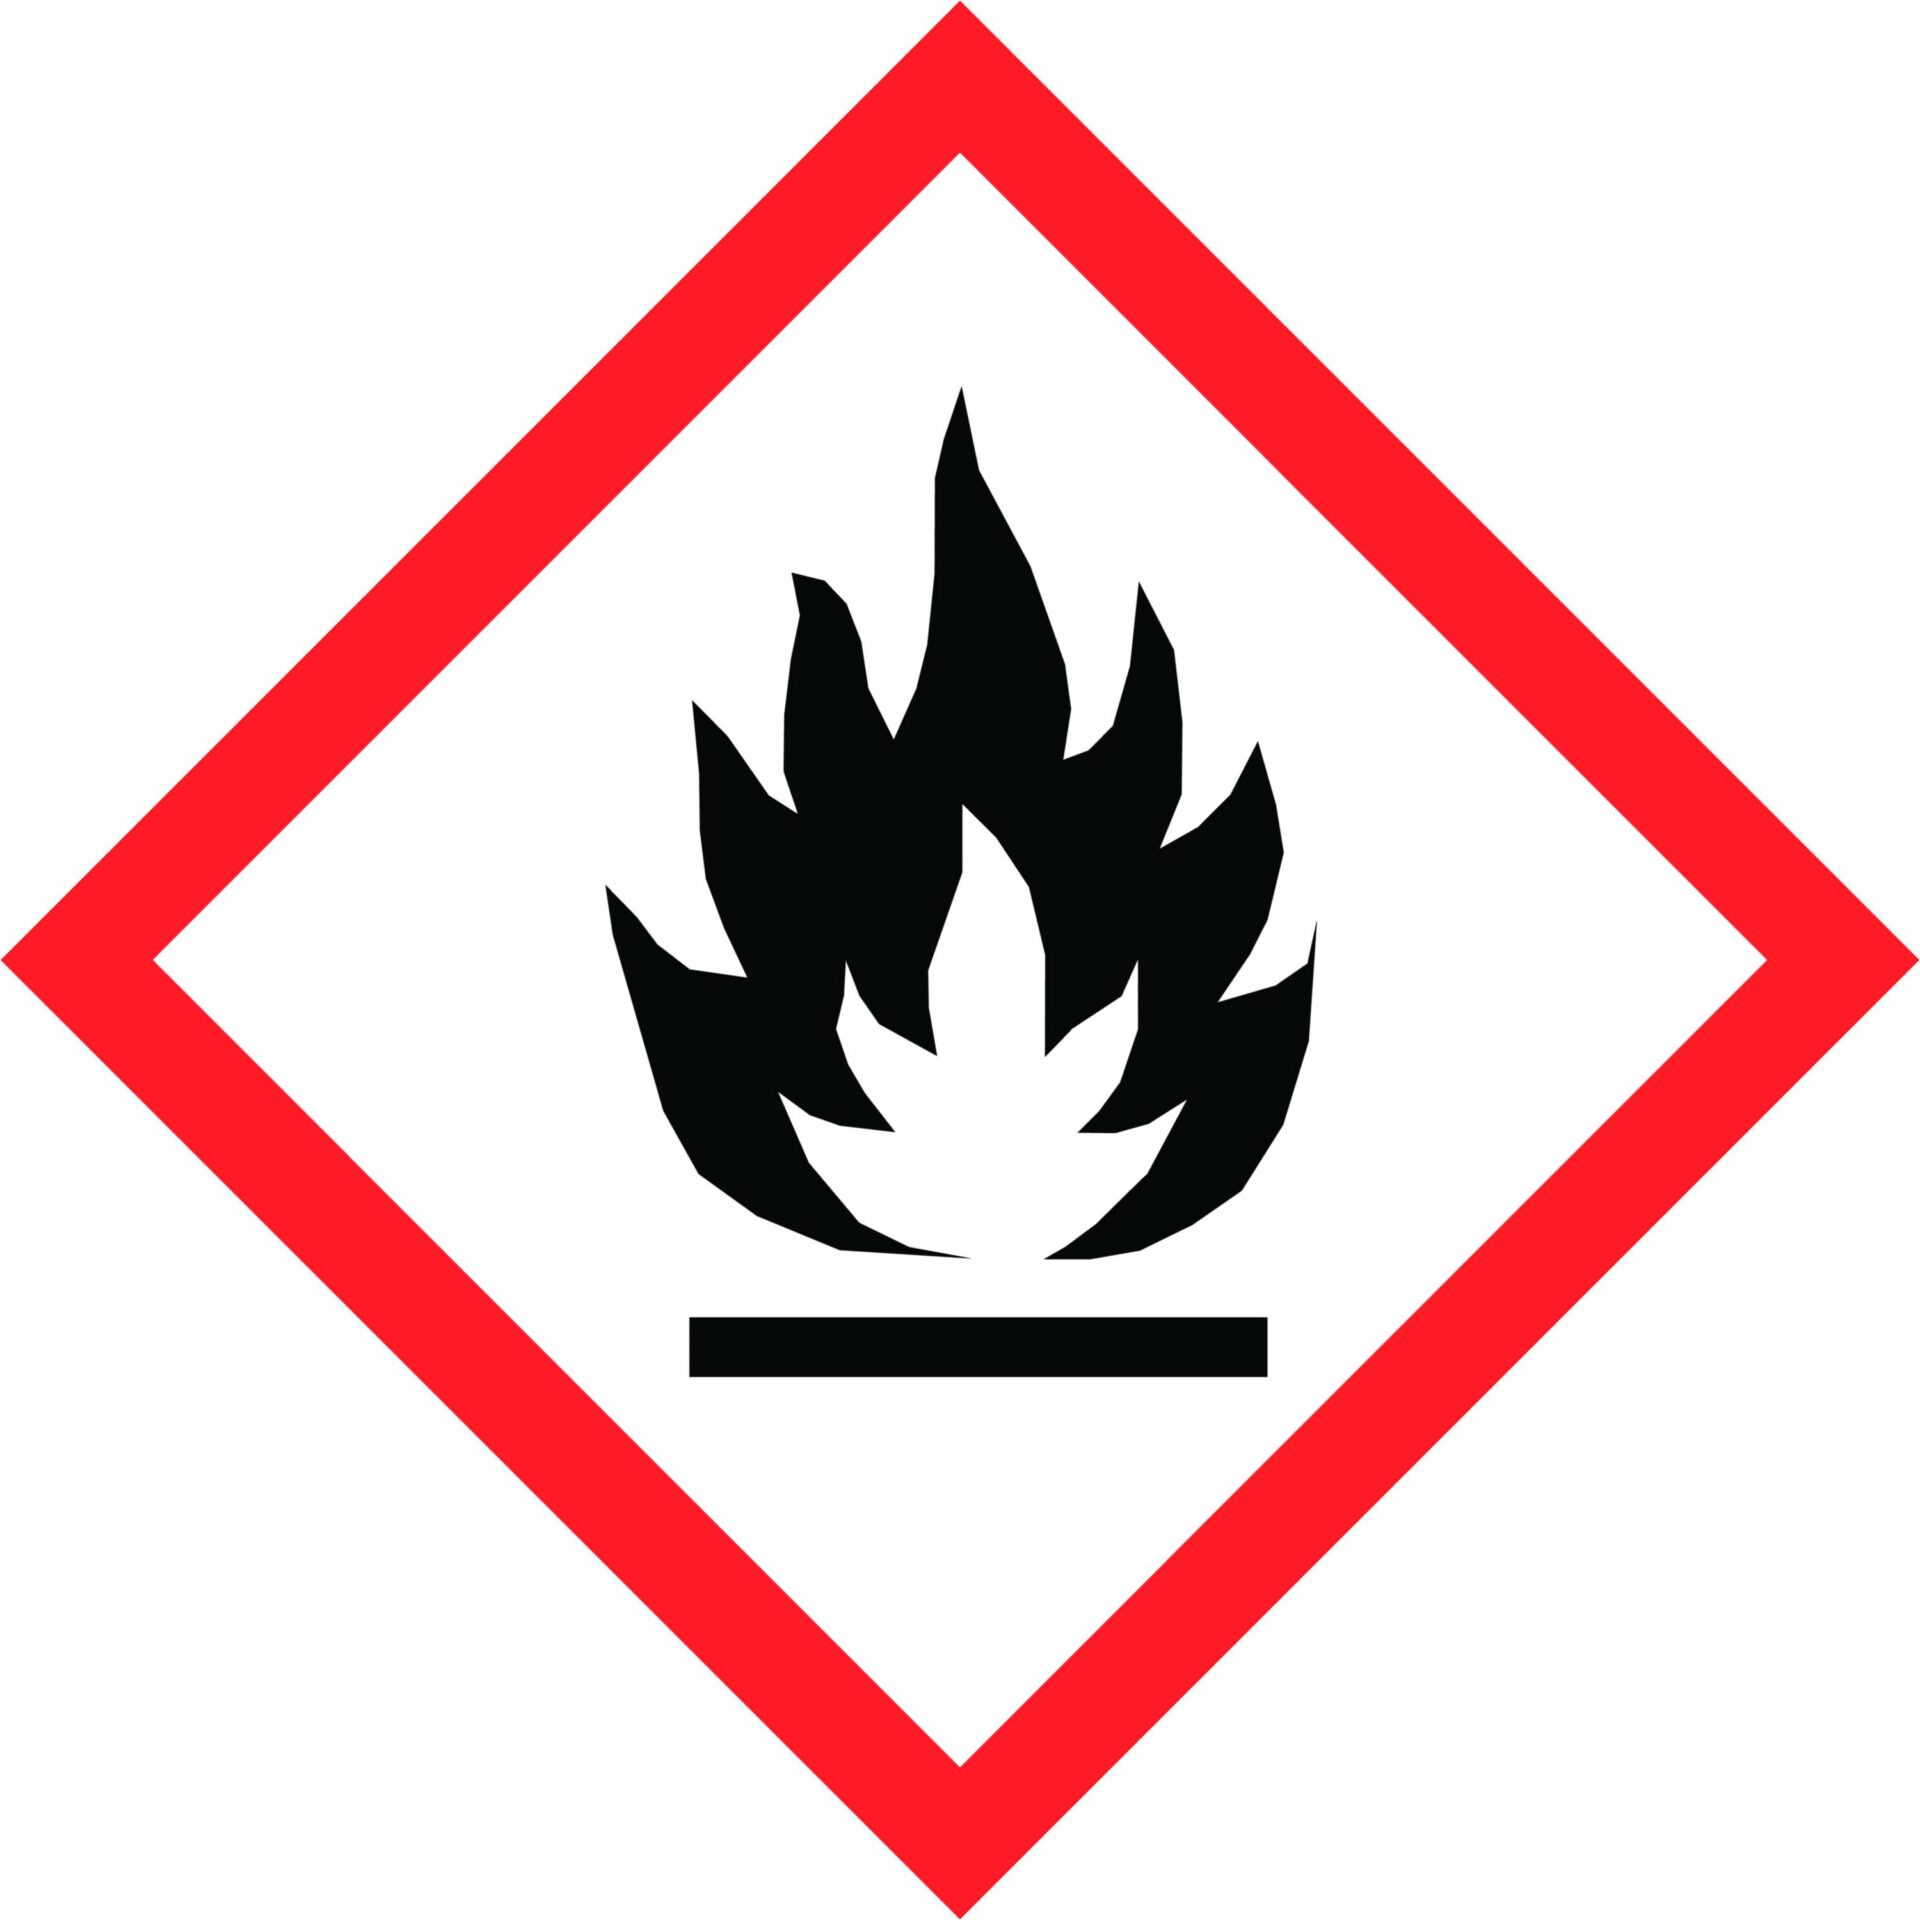 Danger or Warning Flammable